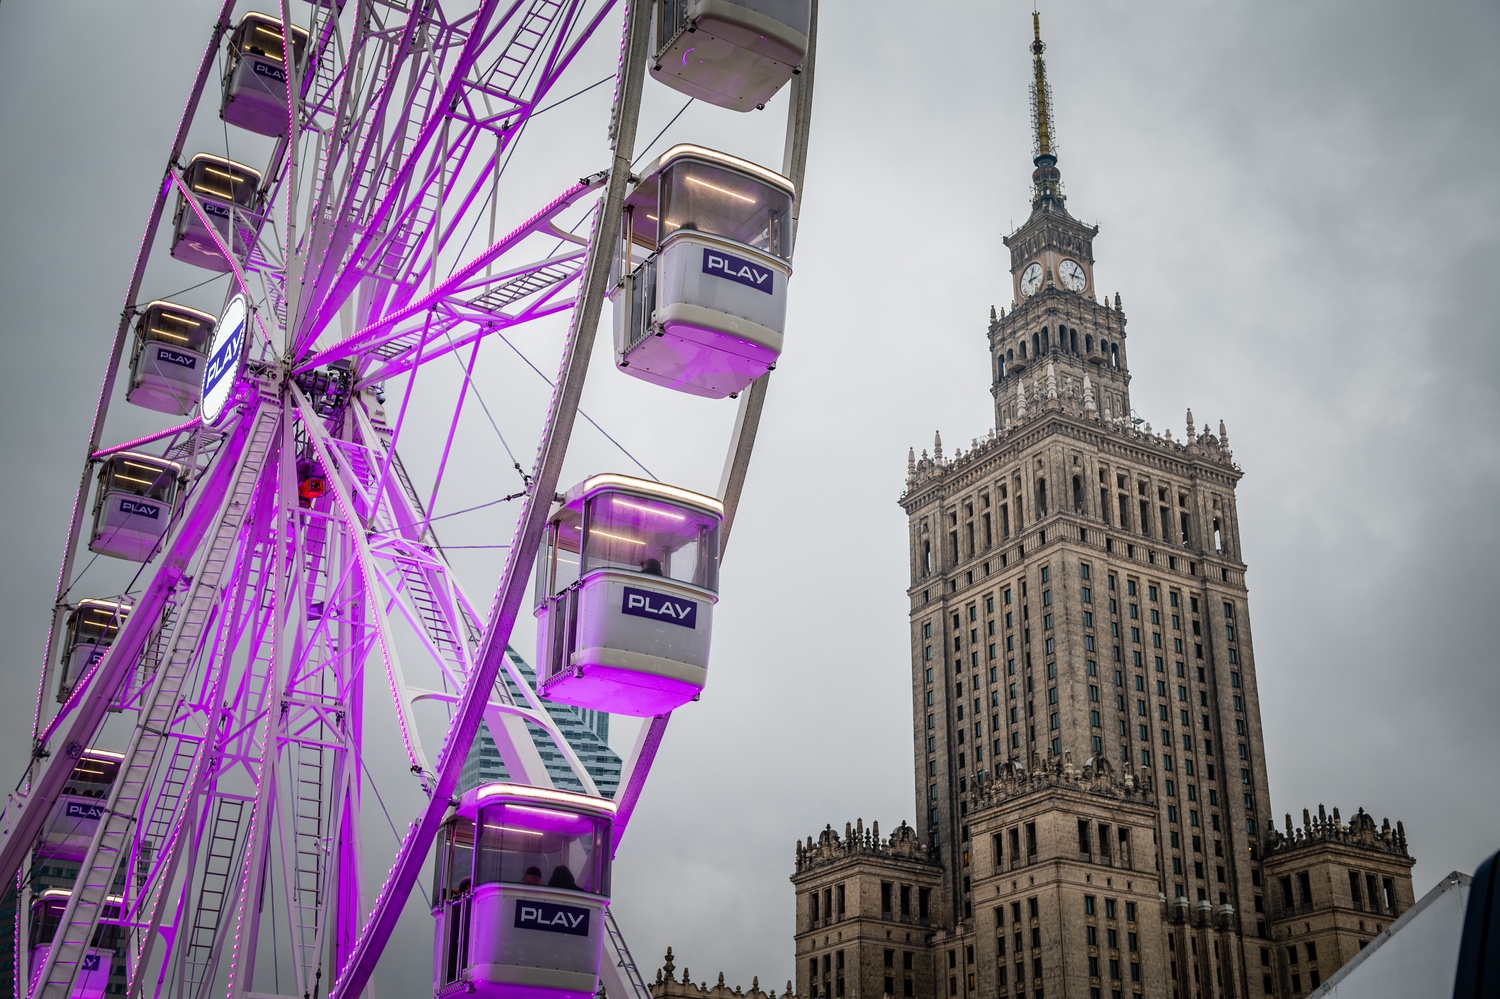 Everyone can take a ride on the Ferris wheel, photo by Paweł Krupka 